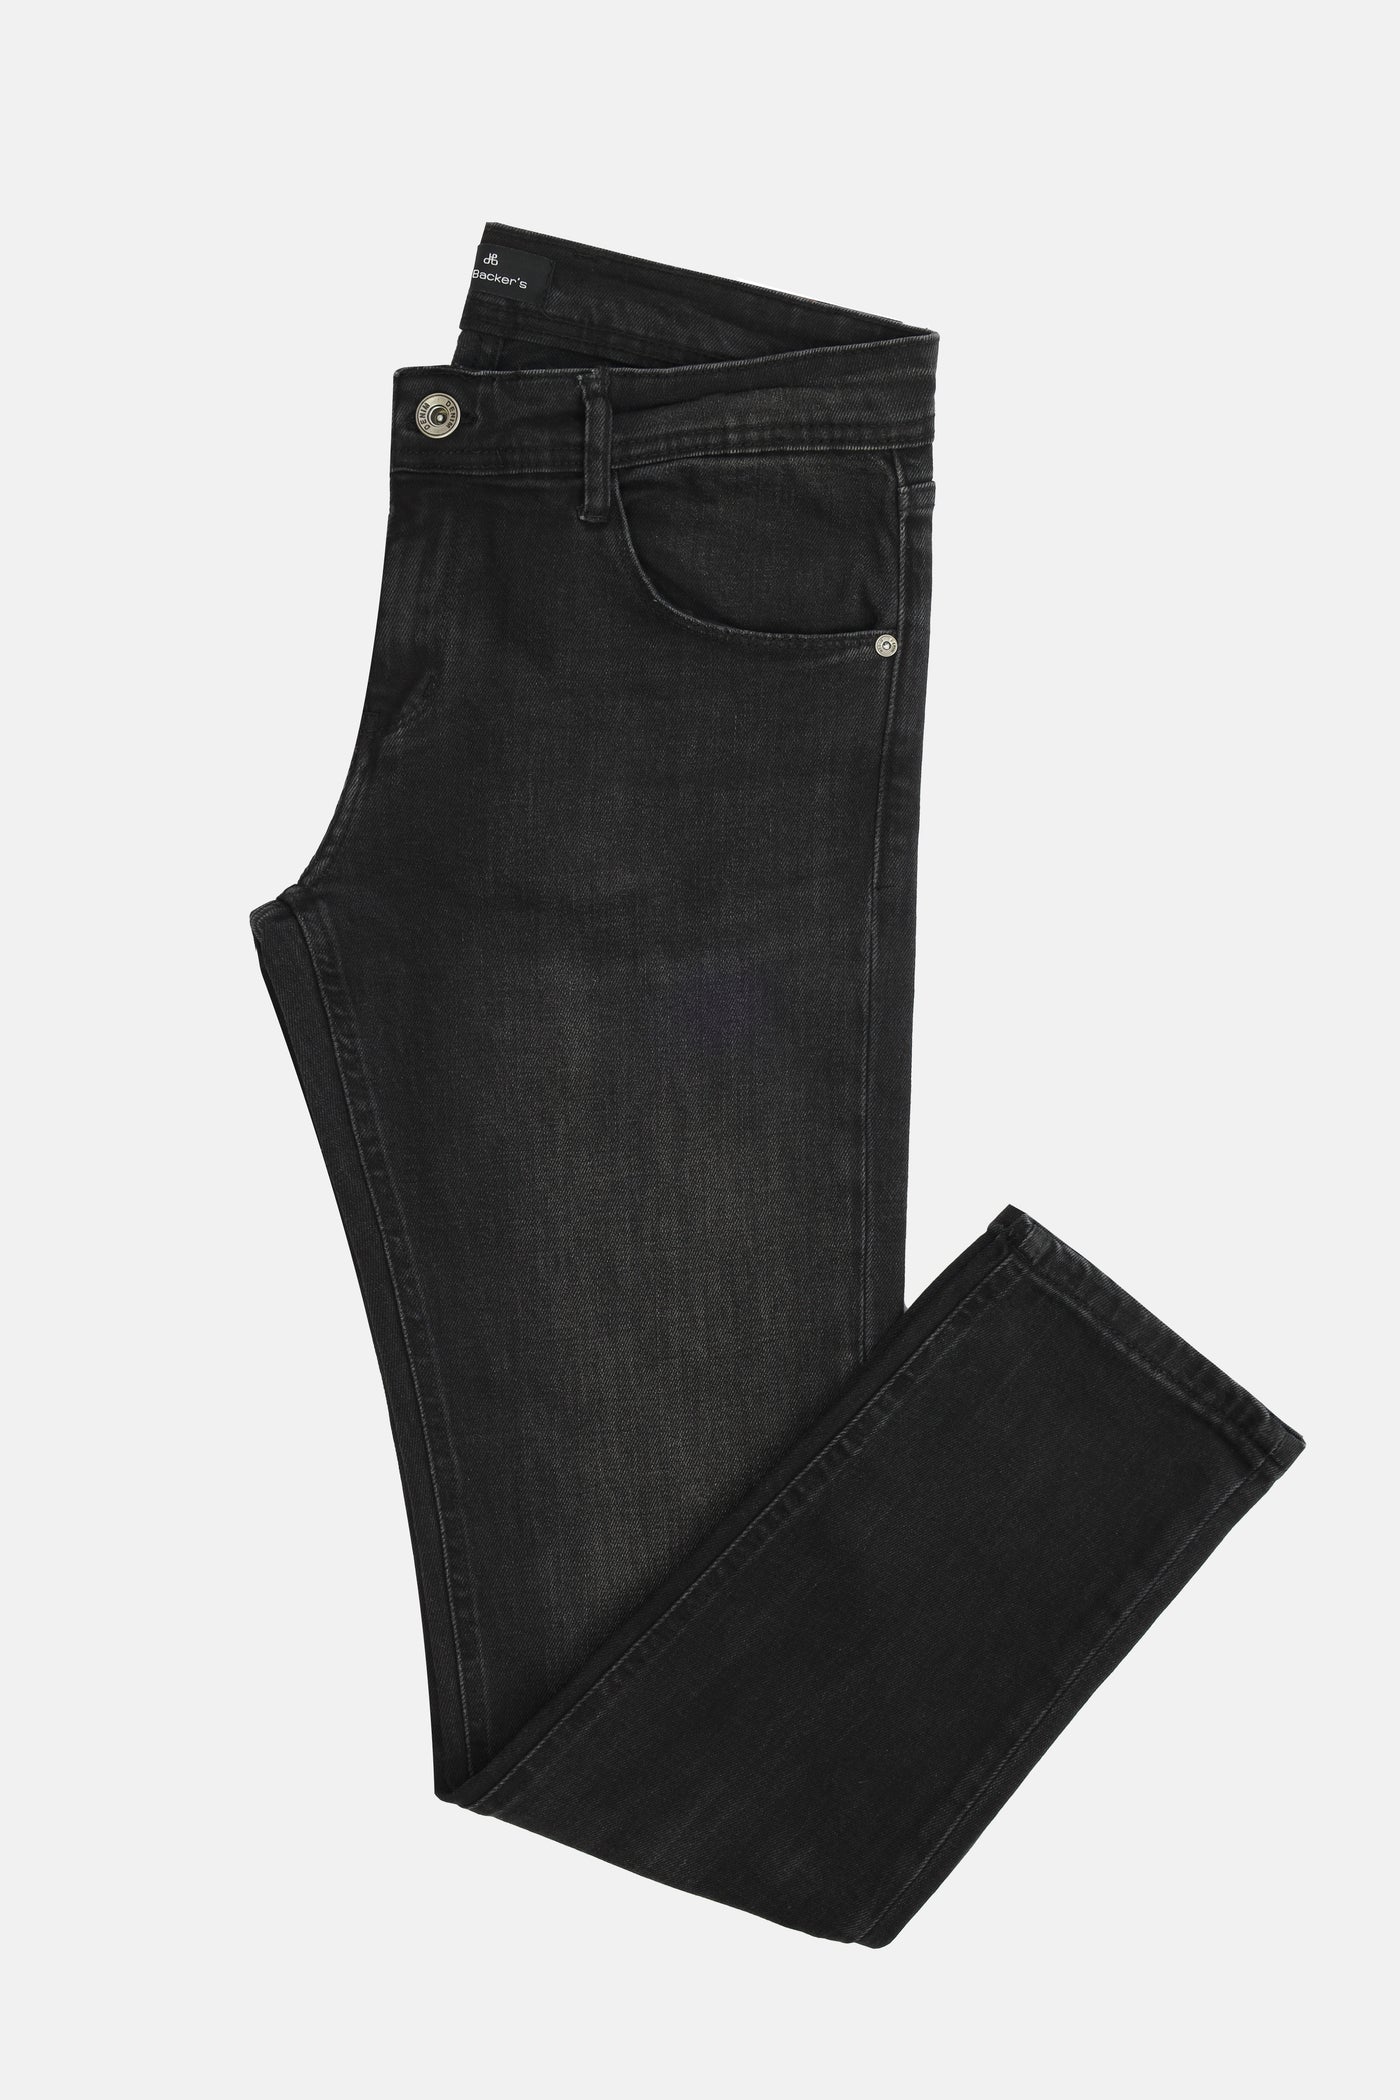 Solid Slim Black Jeans